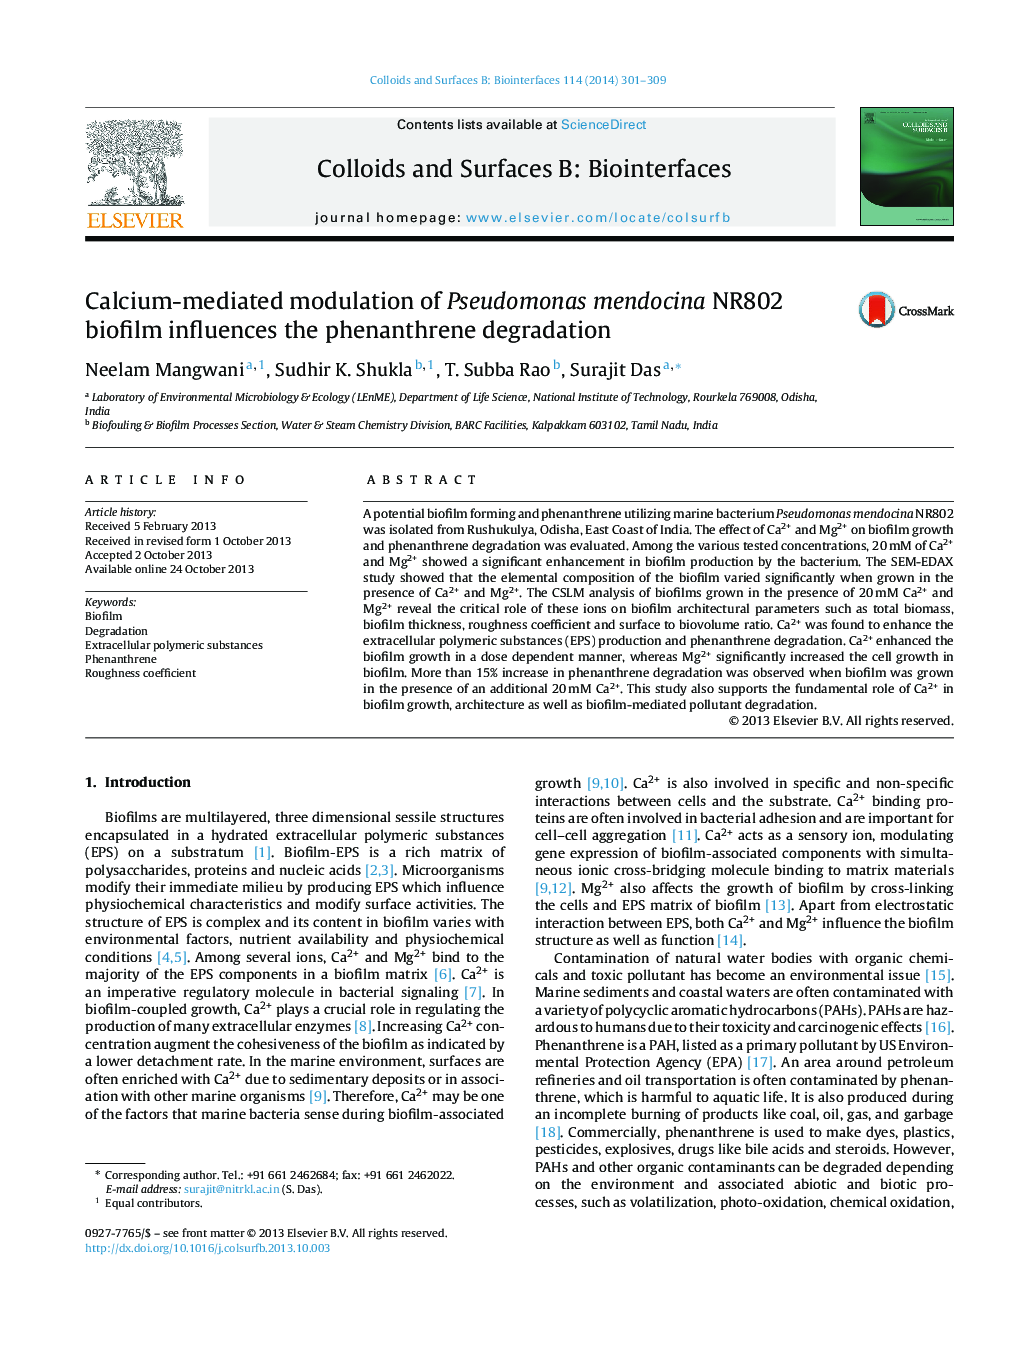 Calcium-mediated modulation of Pseudomonas mendocina NR802 biofilm influences the phenanthrene degradation